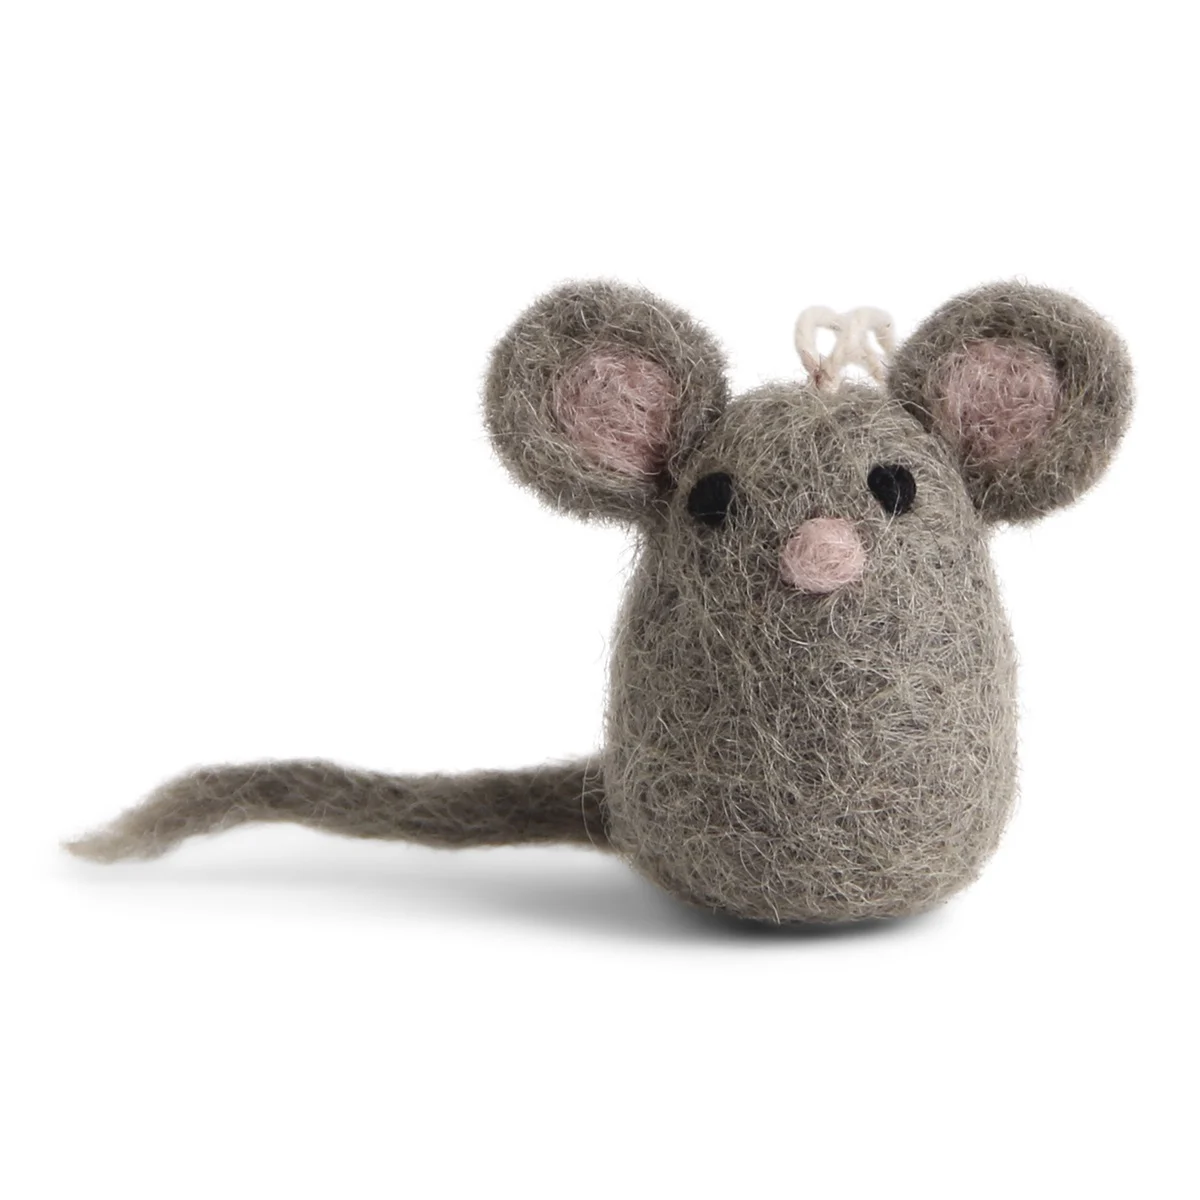 Gry & Sif handgefilztes Mini Mäuschen 3-er Set/ Anhänger